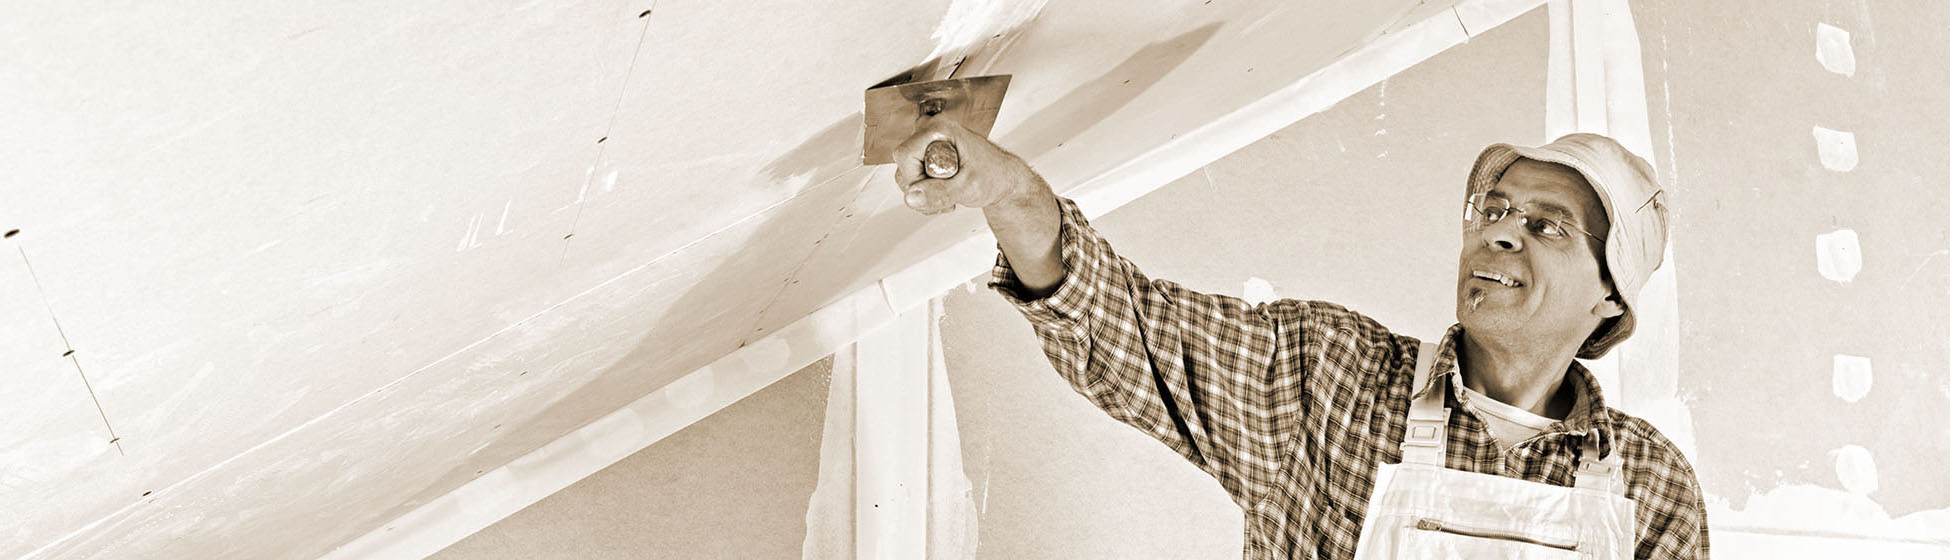 Reparer fissure faux plafond